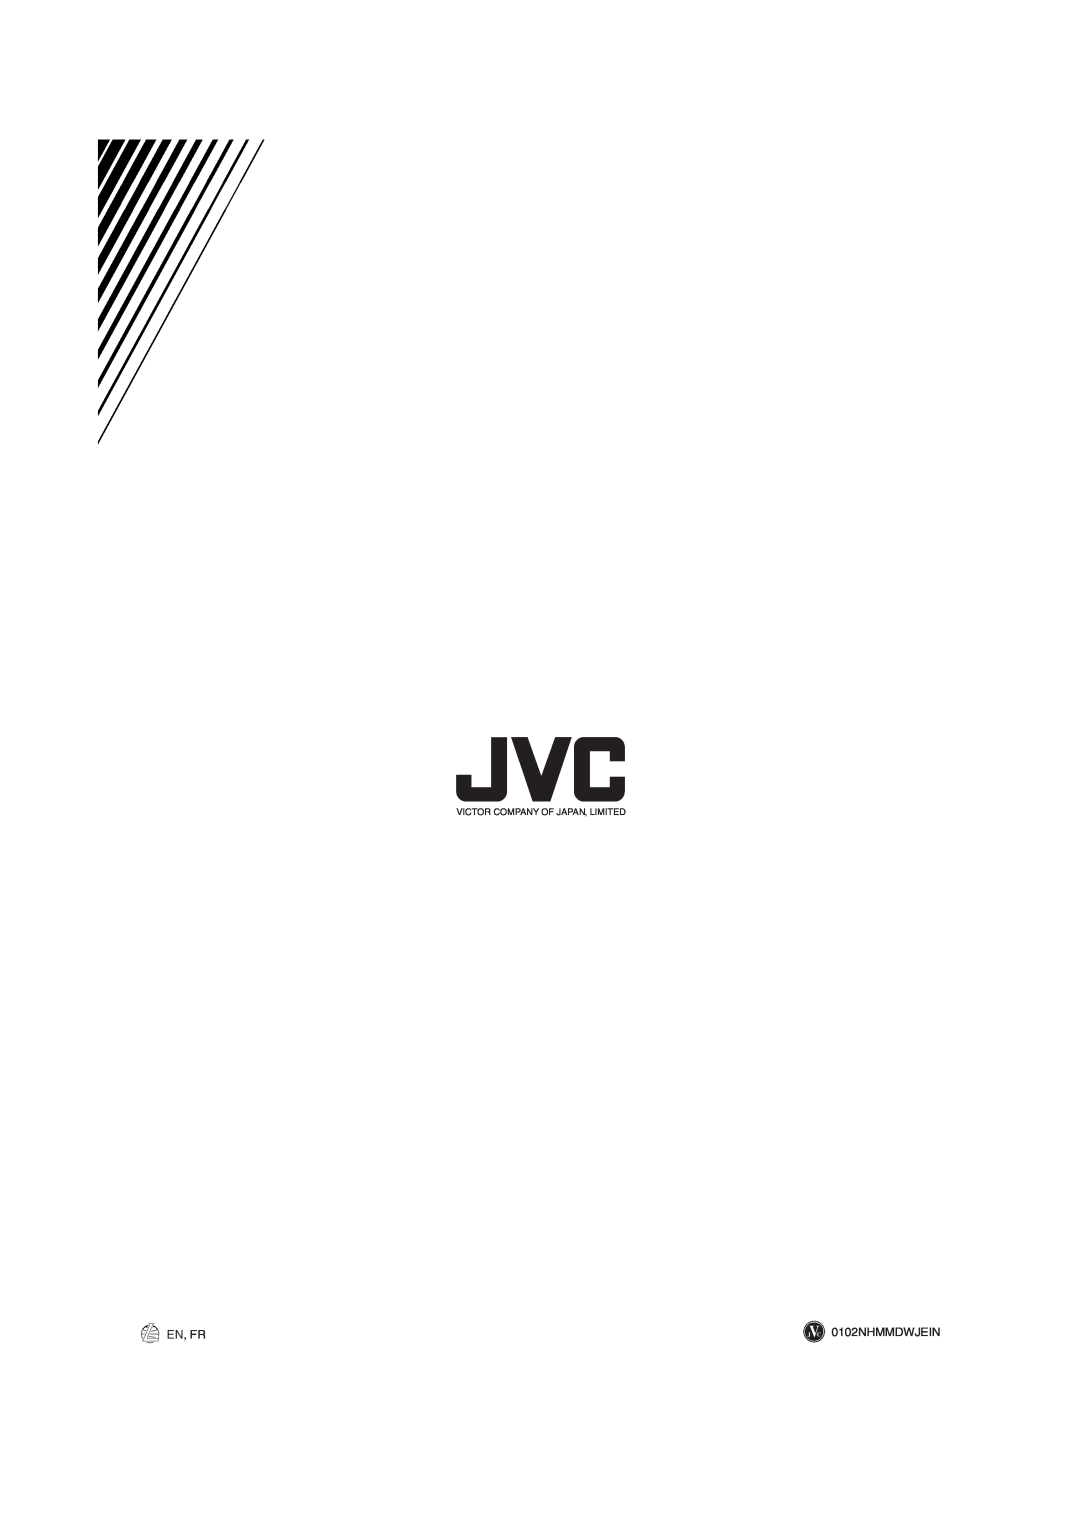 JVC RX-6020VBK manual En, Fr, J C 0102NHMMDWJEIN, Victor Company Of Japan, Limited 